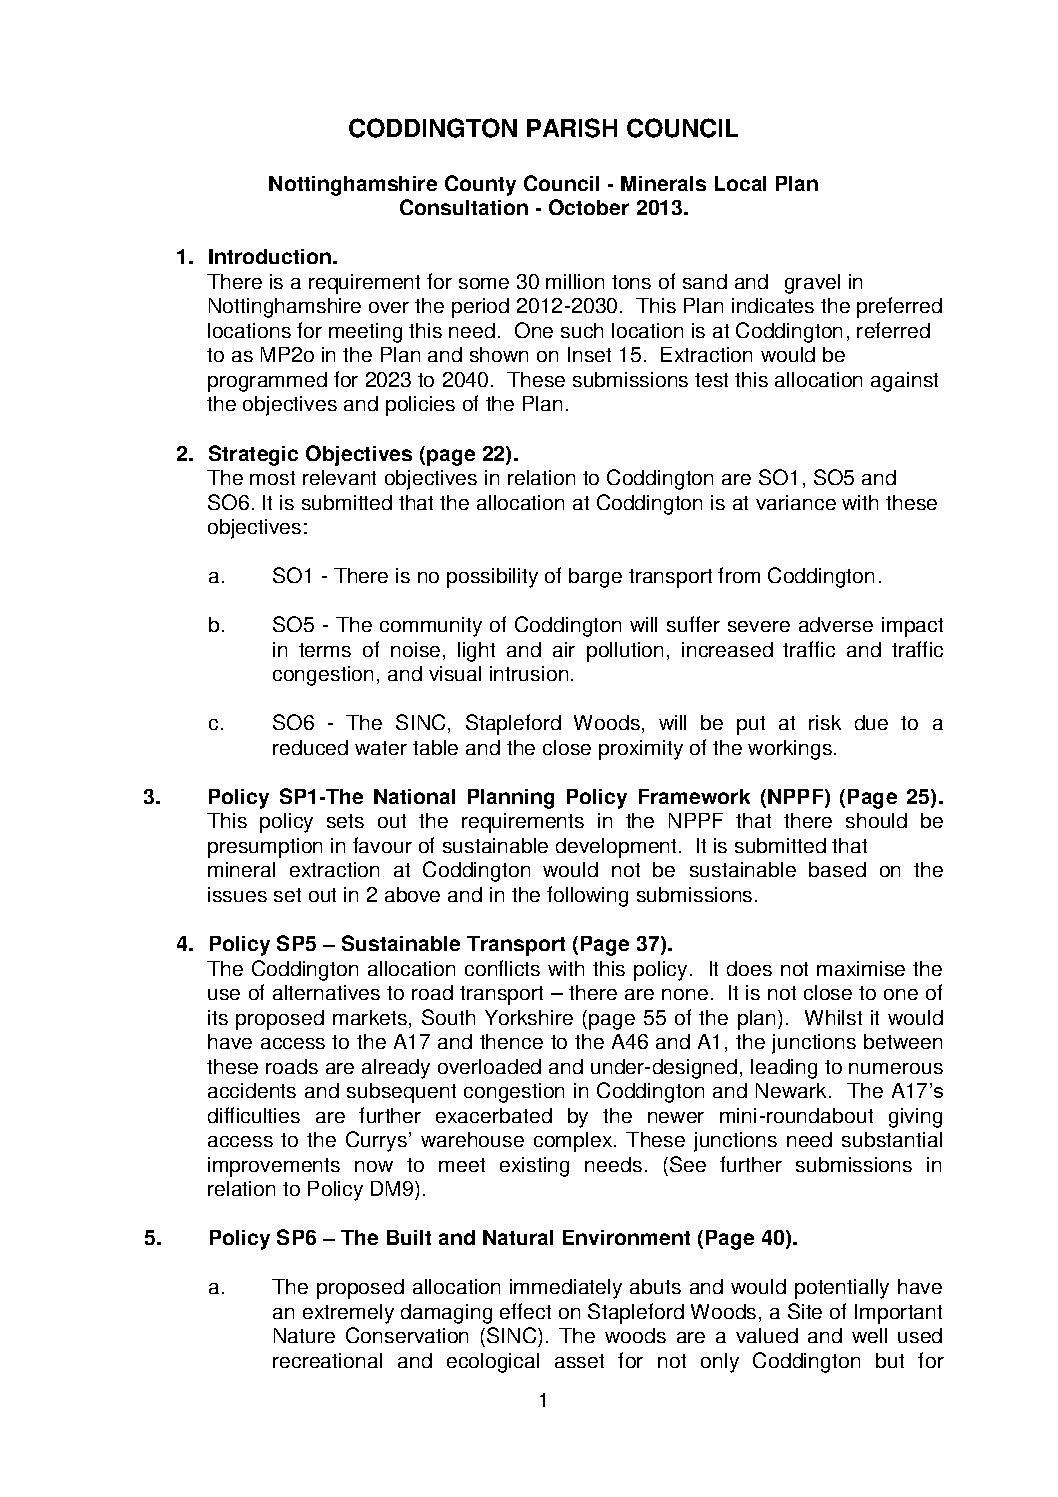 Nottinghamshire Minerals Local Plan Consultation - THE PARISH COUNCIL'S RESPONS